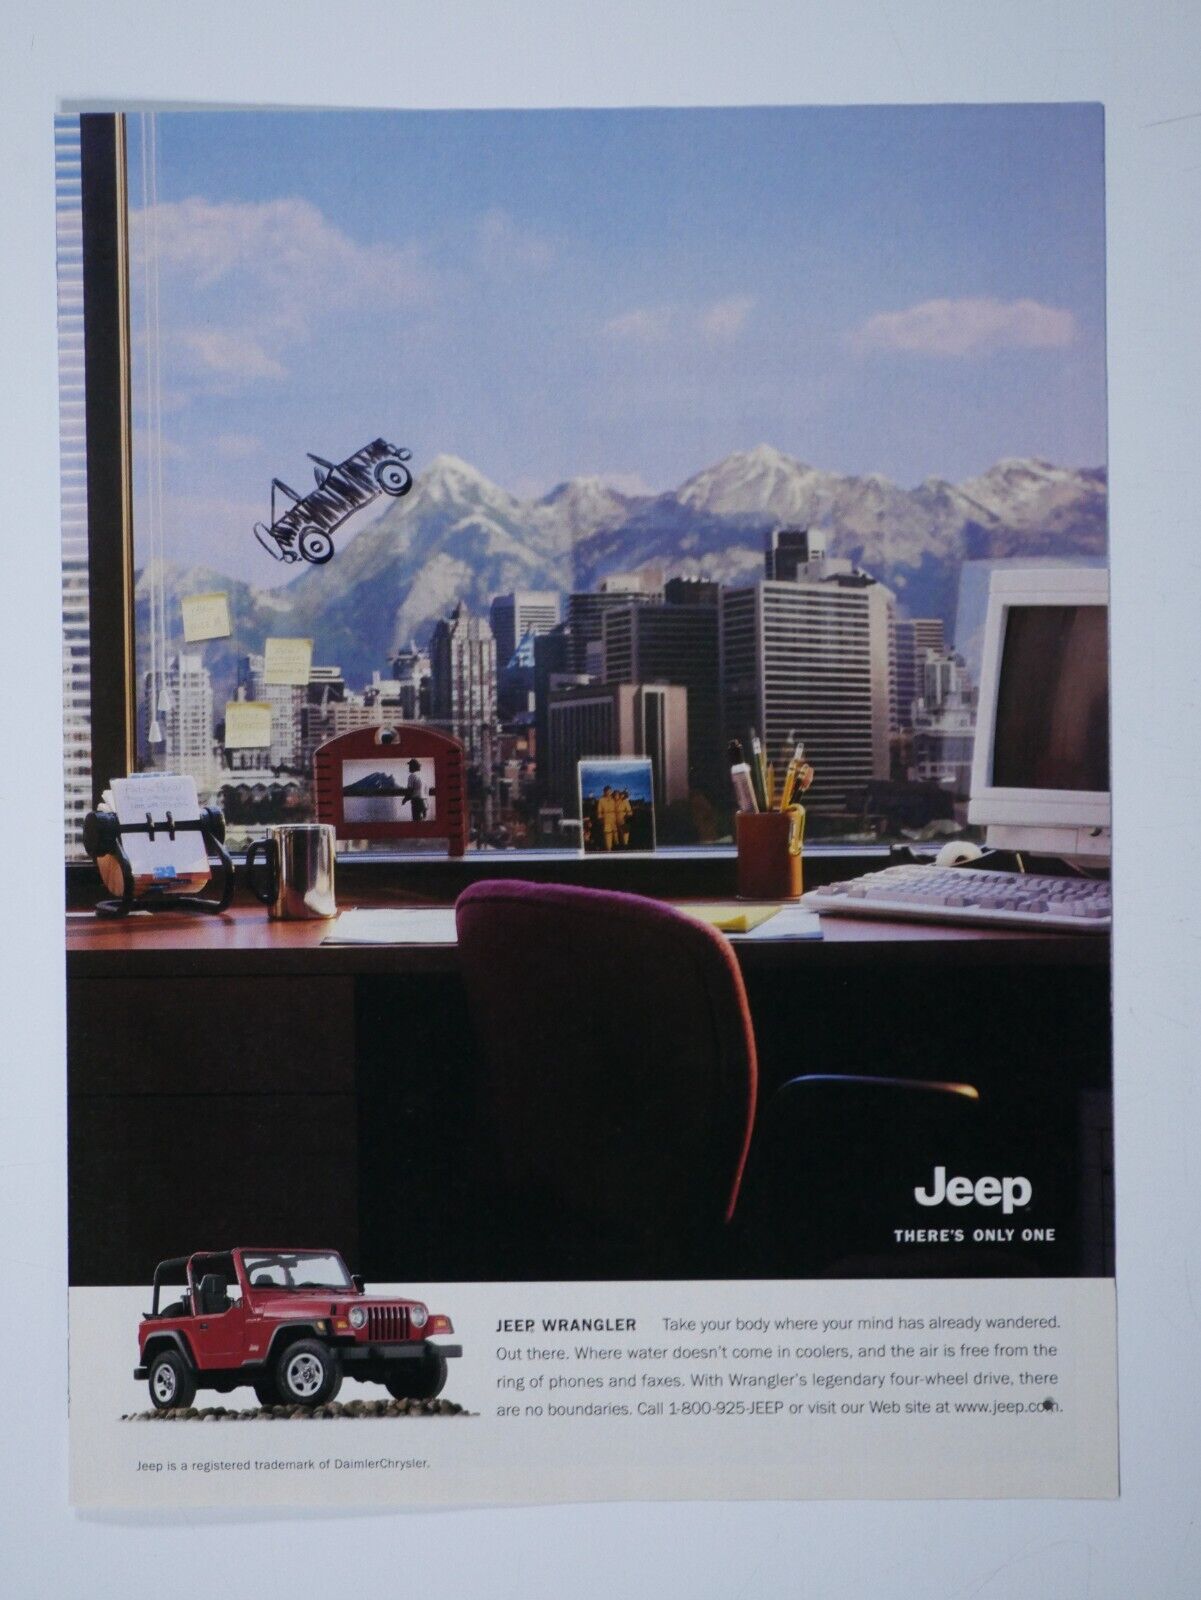 2002 Jeep Wrangler Vintage Office Window Sketch Original Print Ad